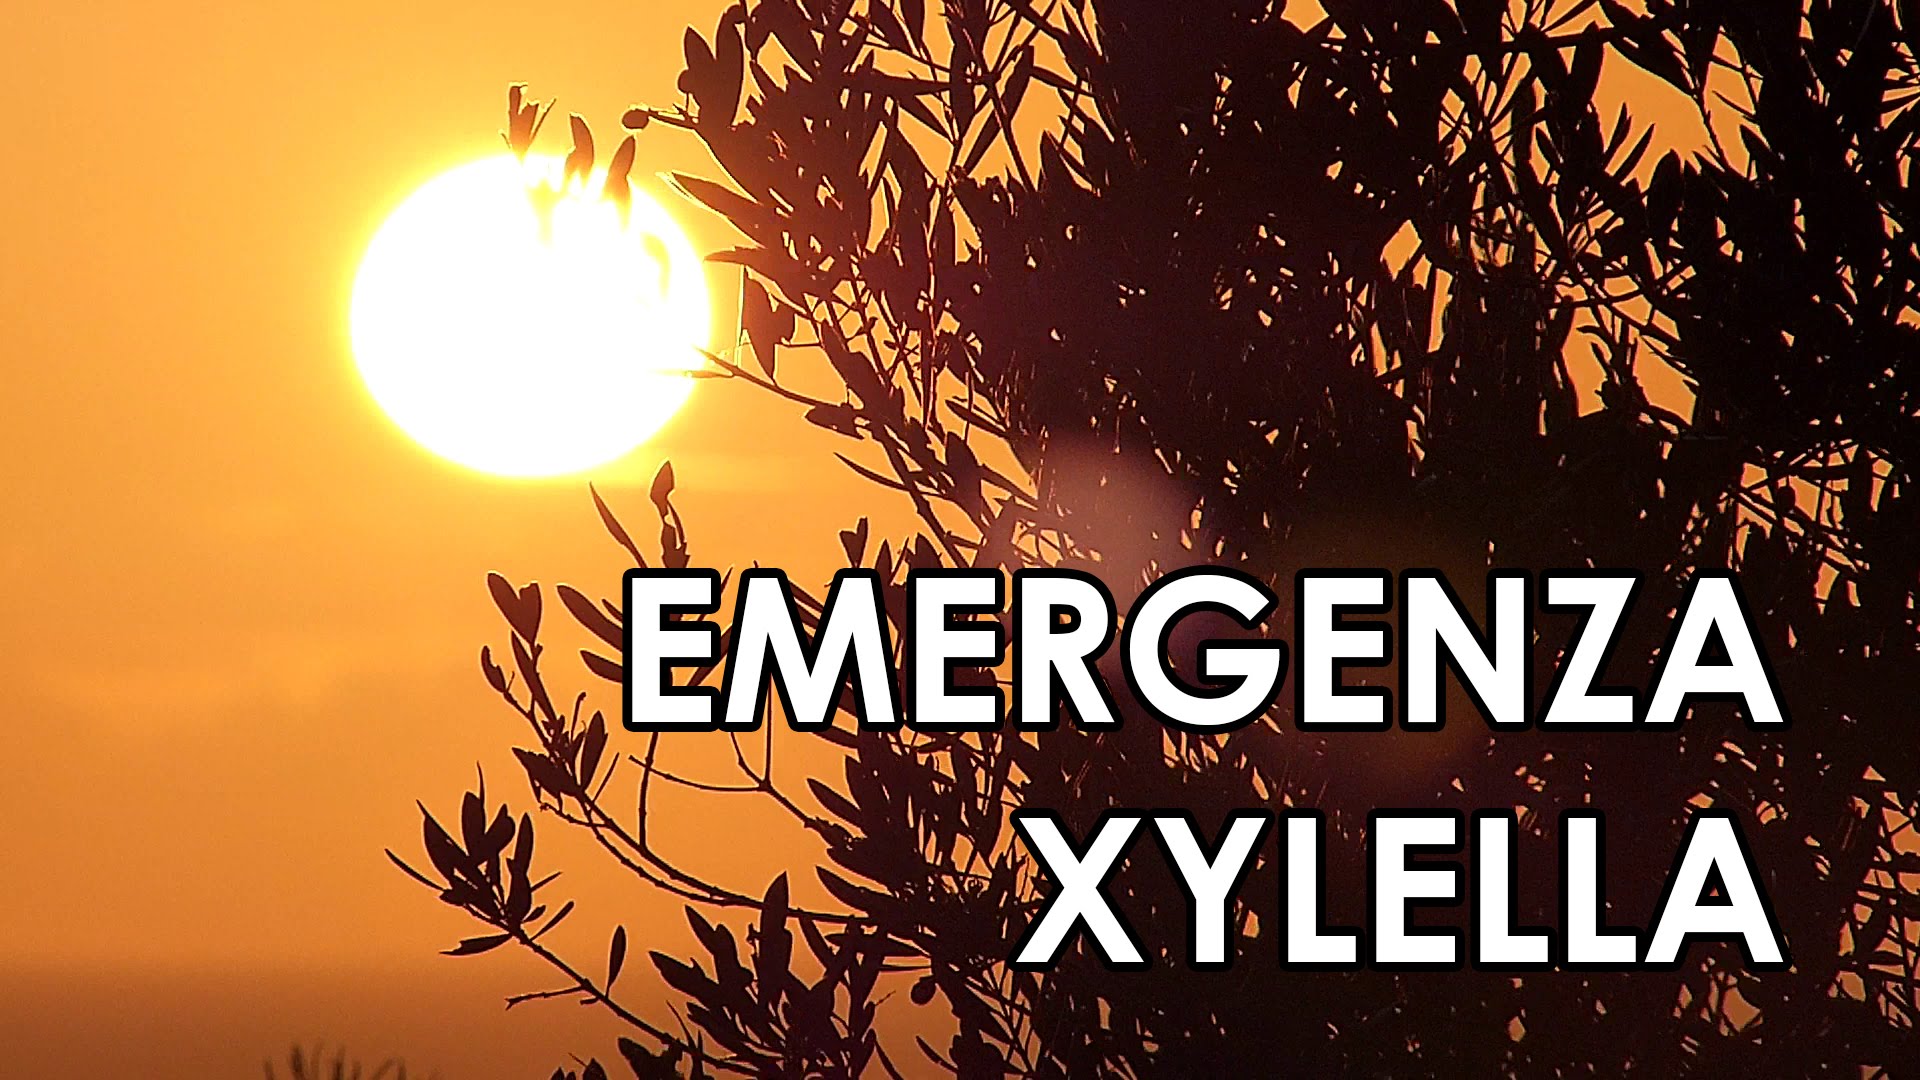 Emergenza Xylella